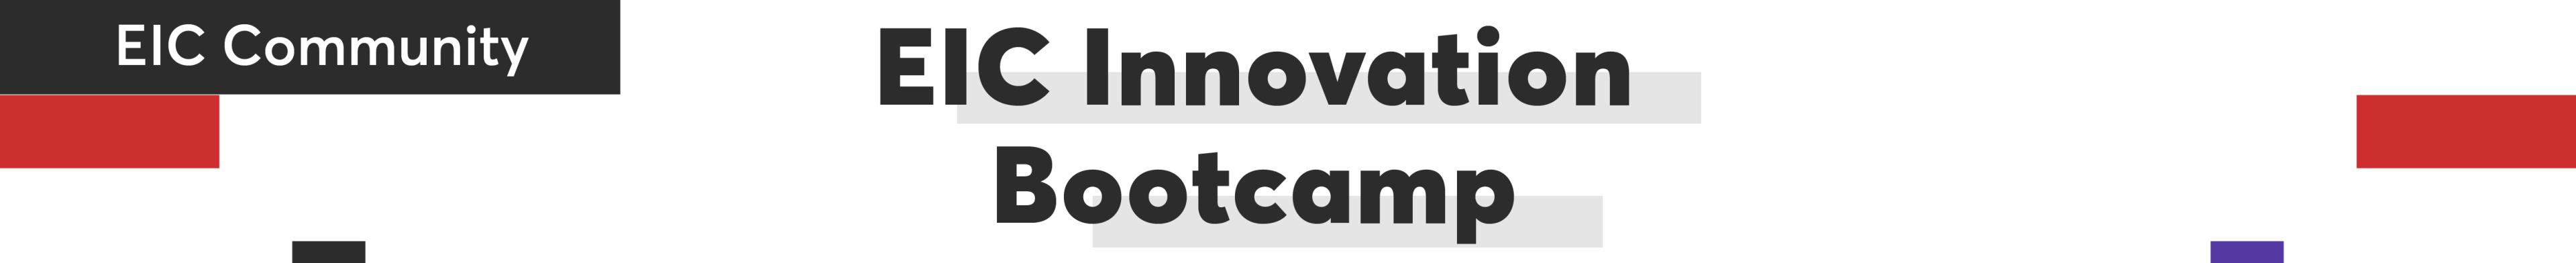 eic_innovation_bootcamp_community_banner.jpg